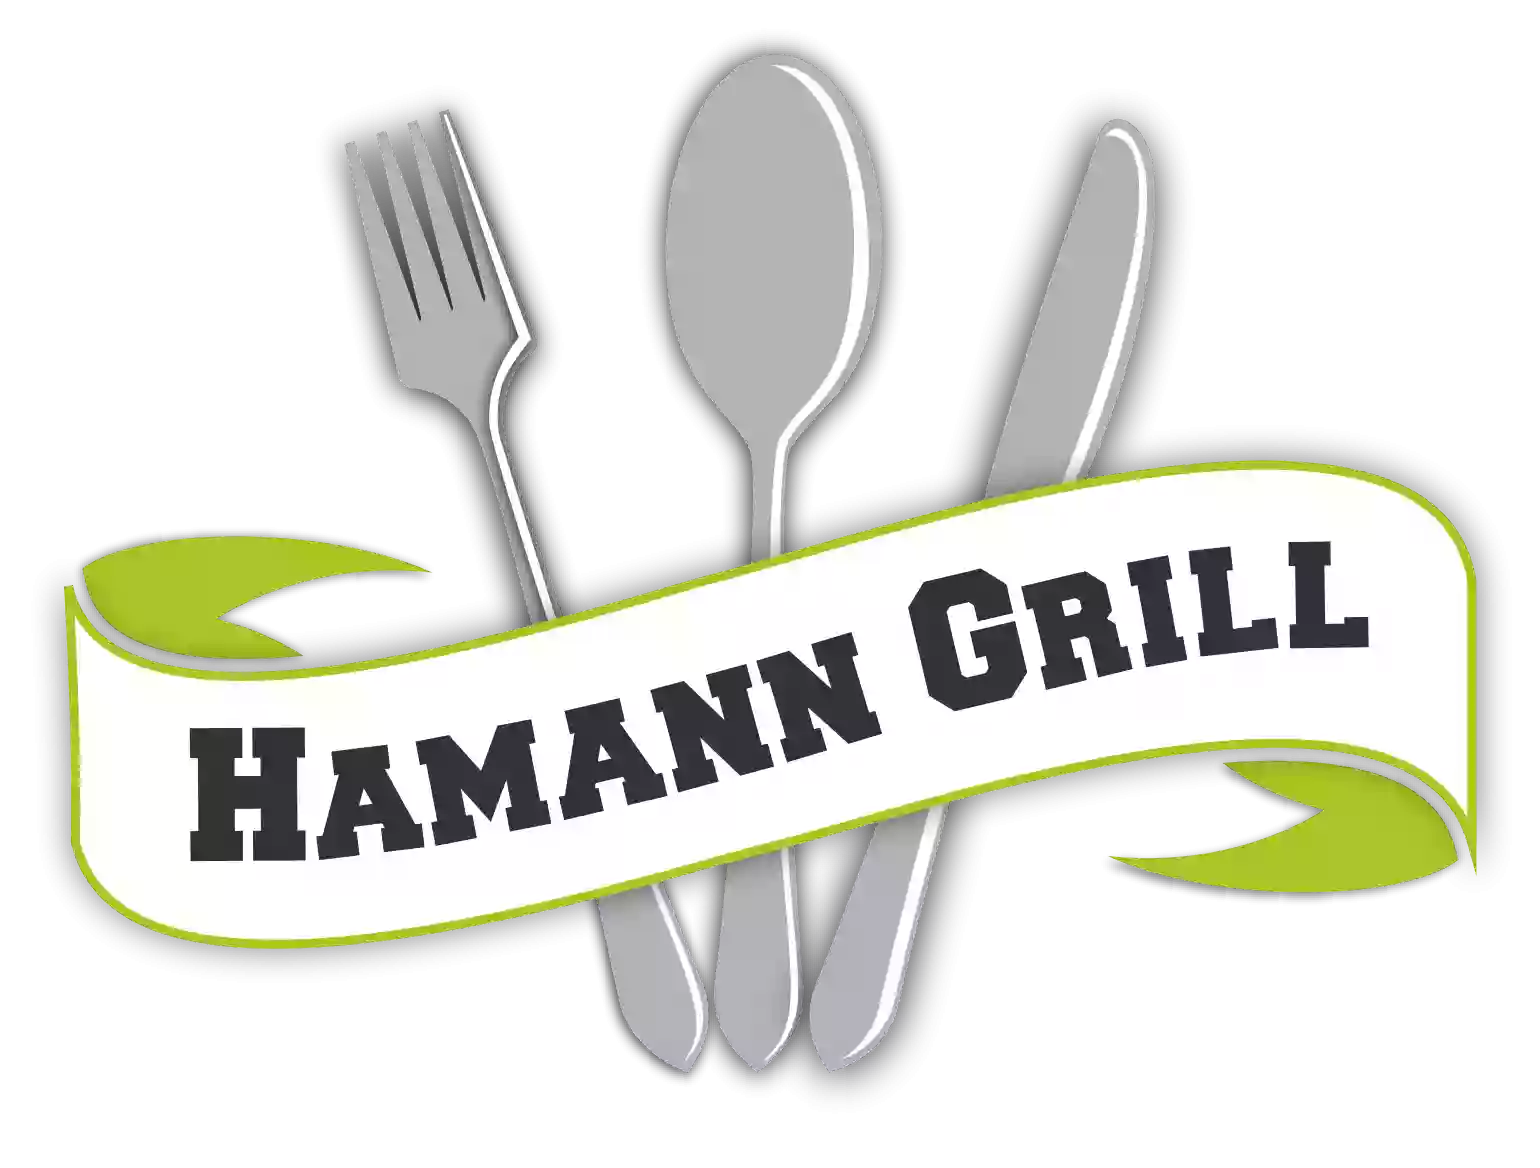 Hamann-Grill